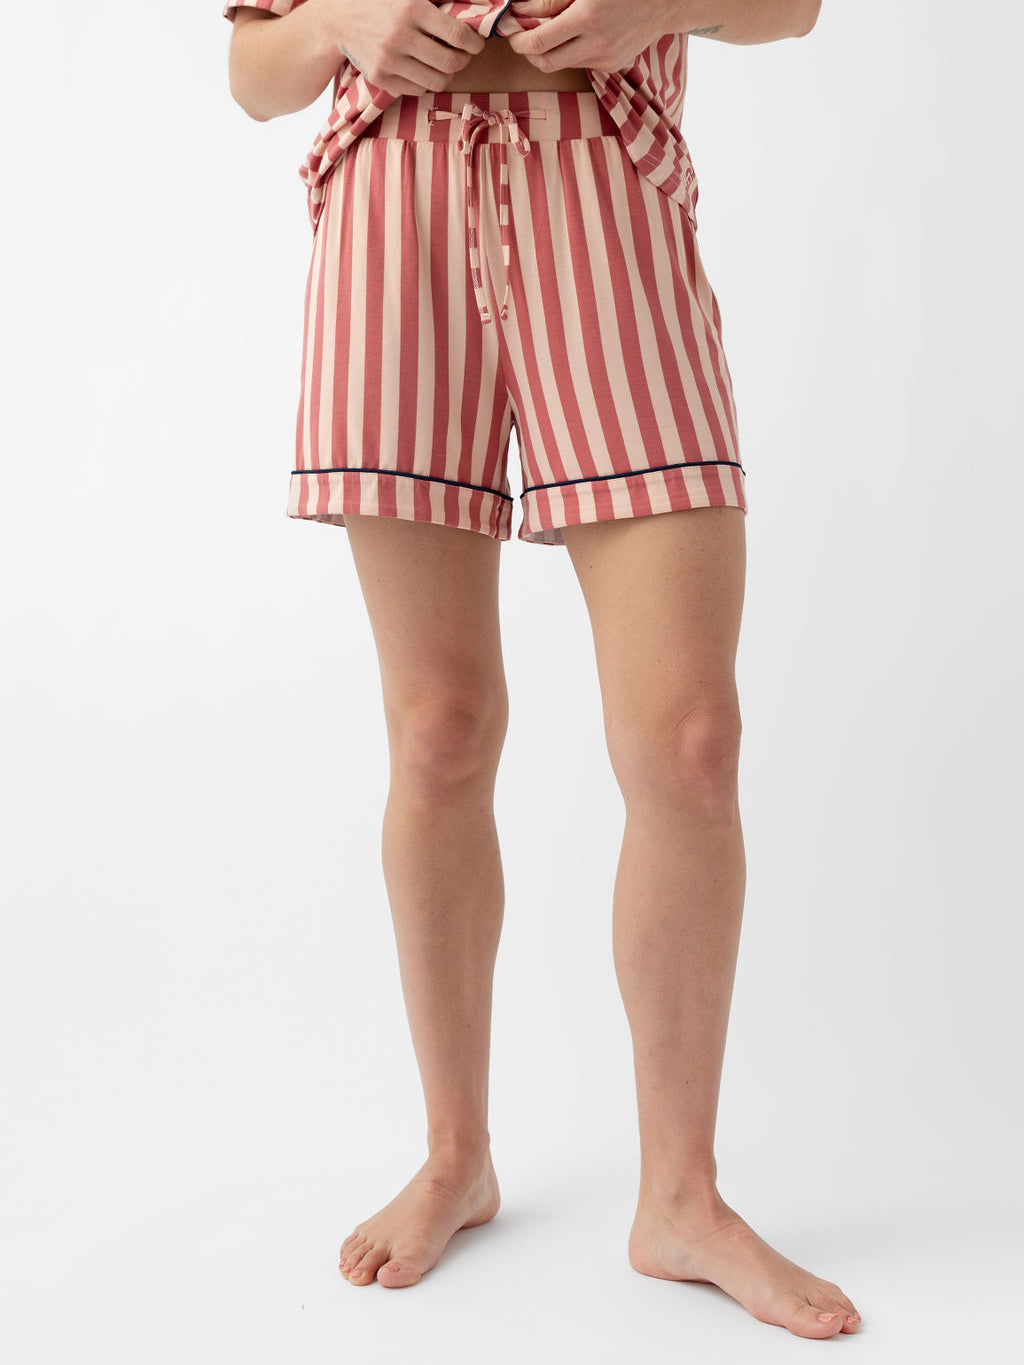 Woman wearing blush stripe pajama shorts with white background 